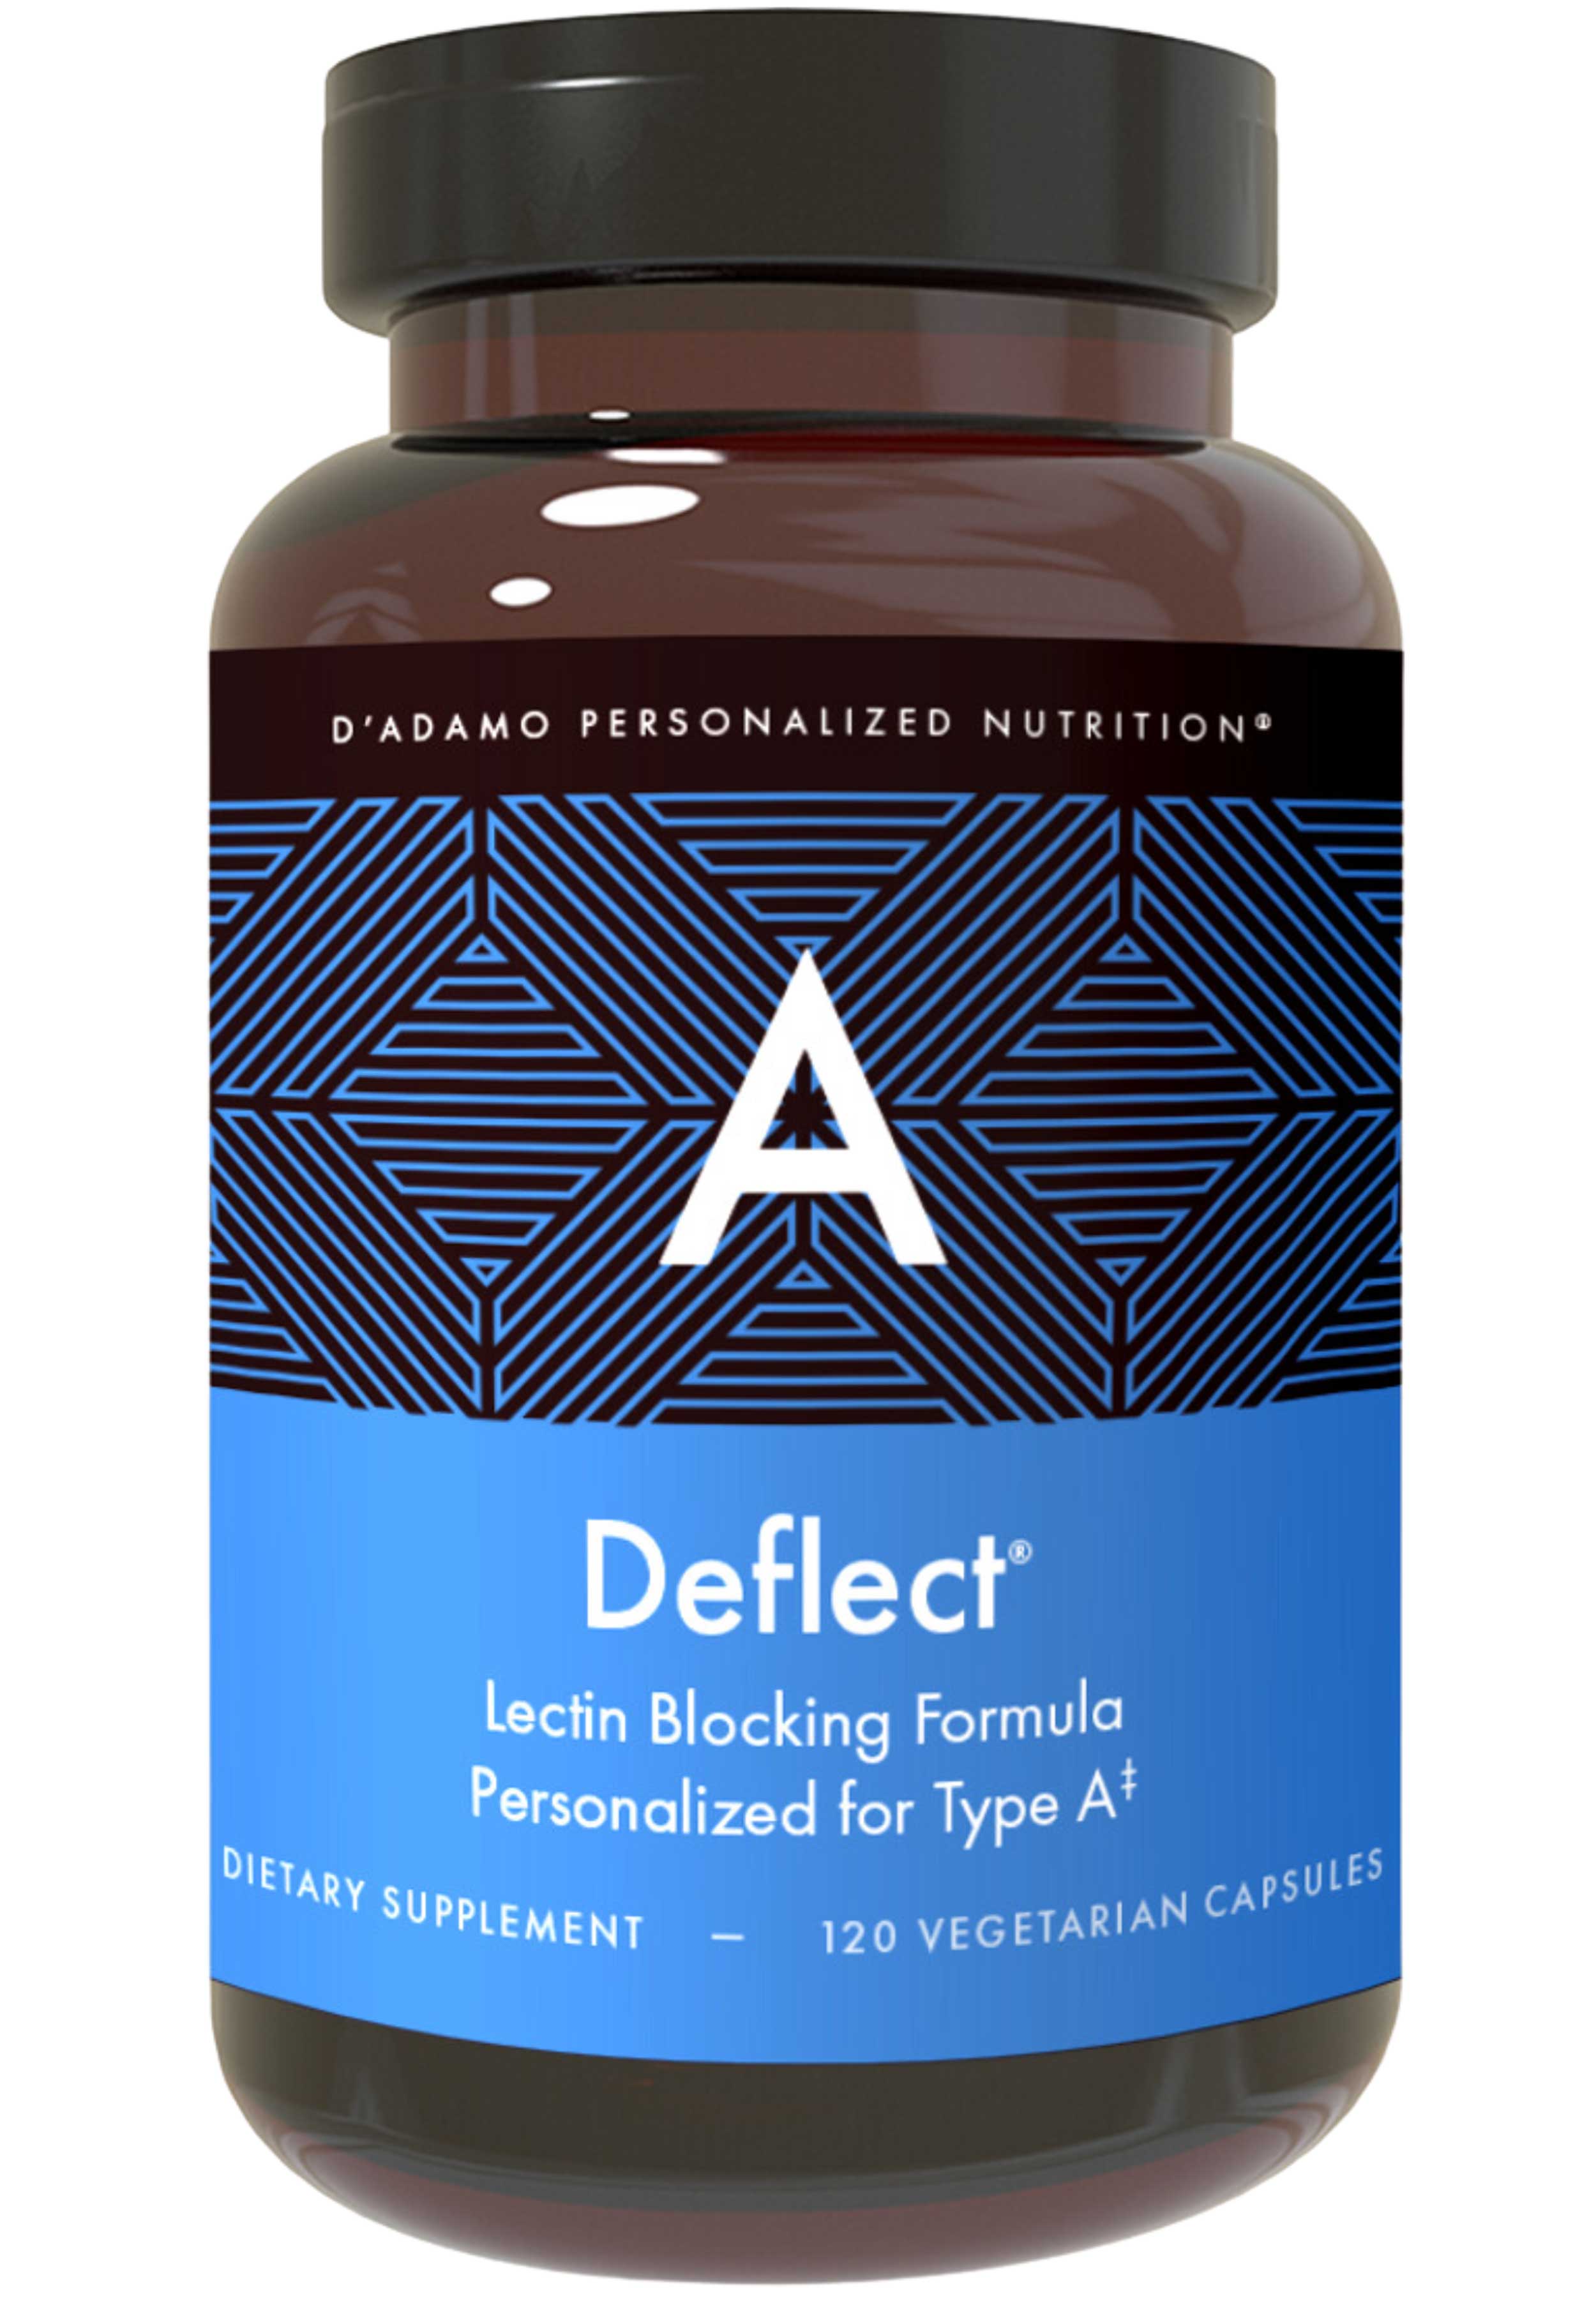 D'Adamo Personalized Nutrition Deflect A